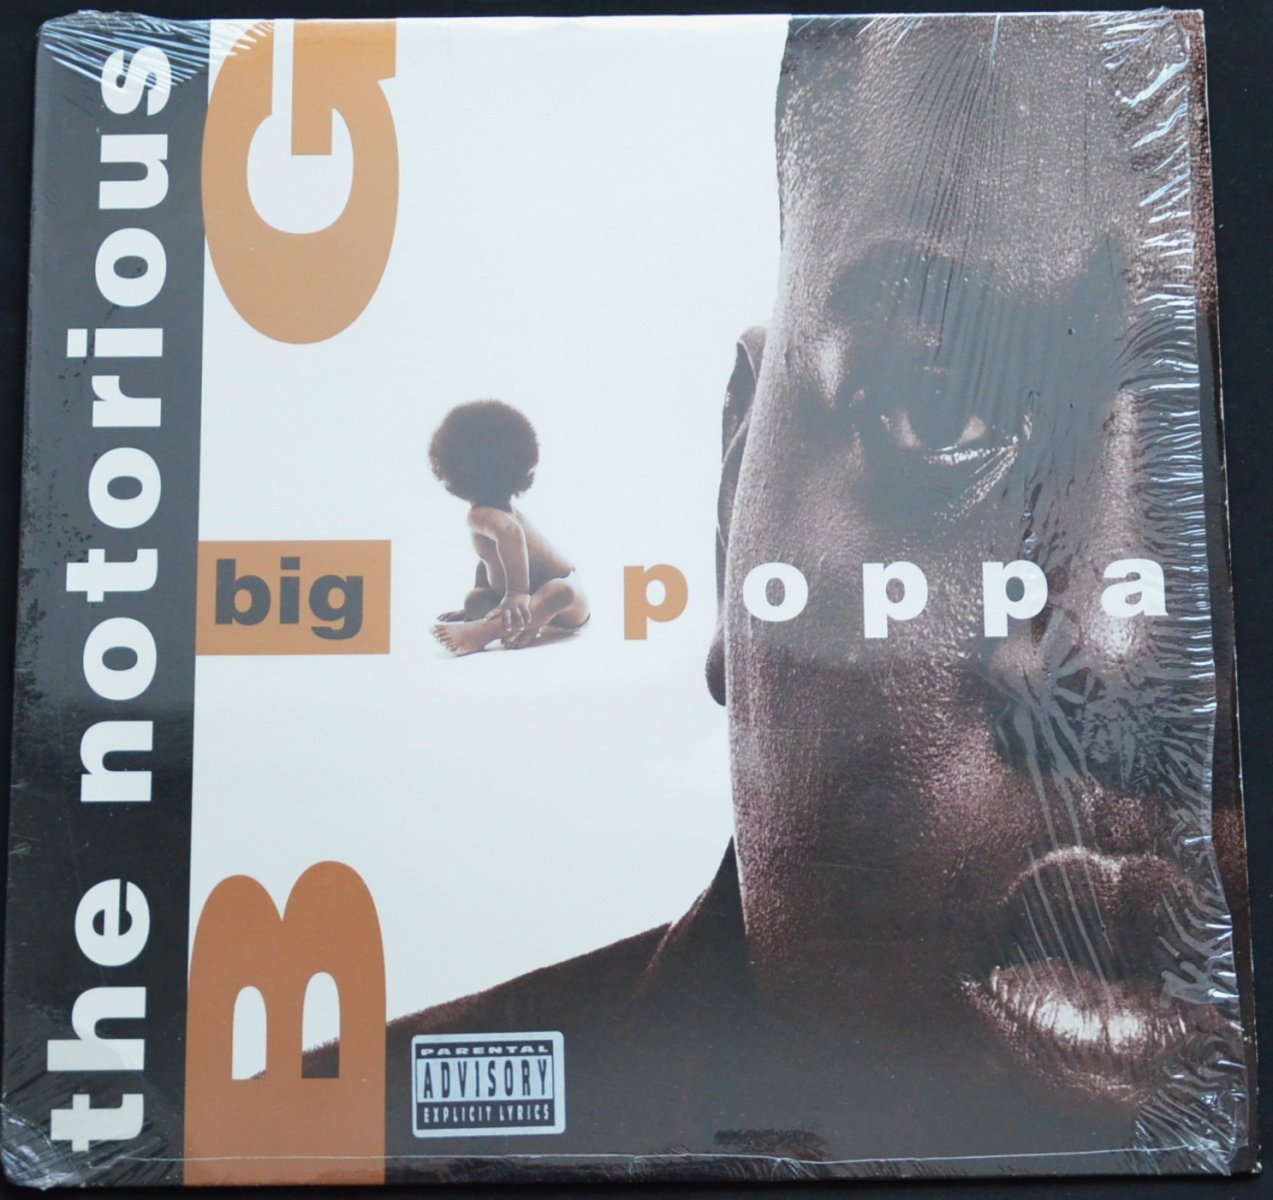 THE NOTORIOUS B.I.G. / BIG POPPA / WARNING (12